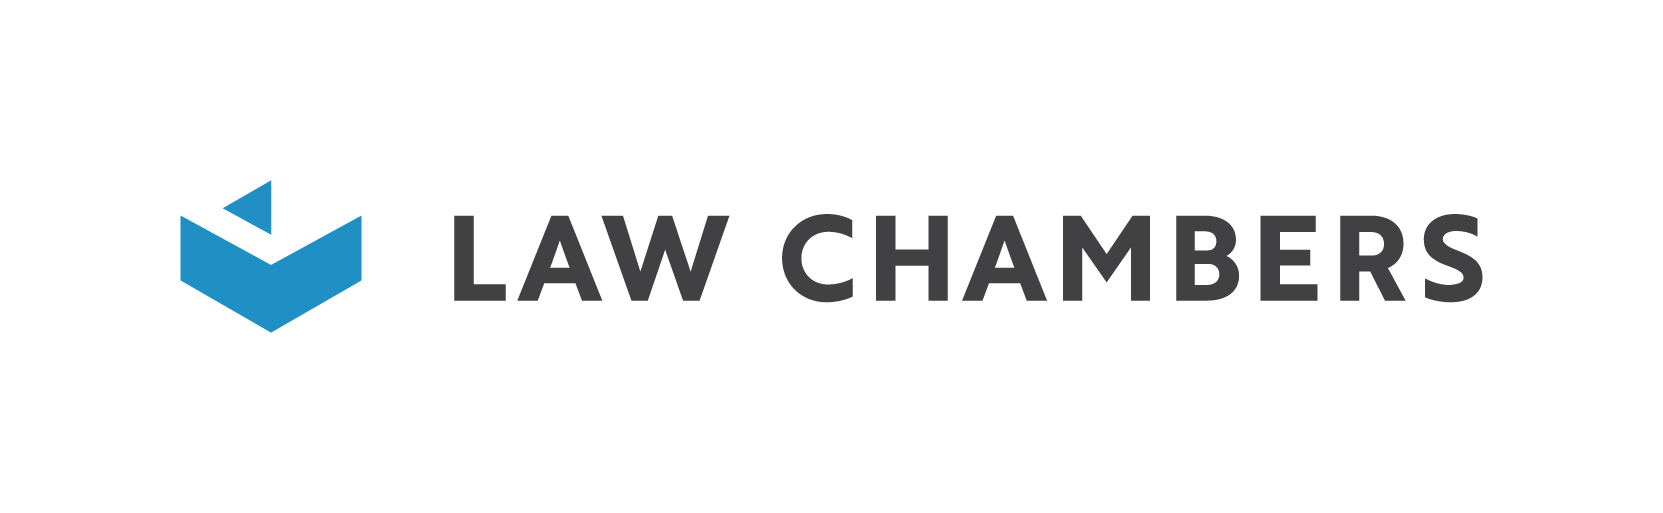 Law Chambers